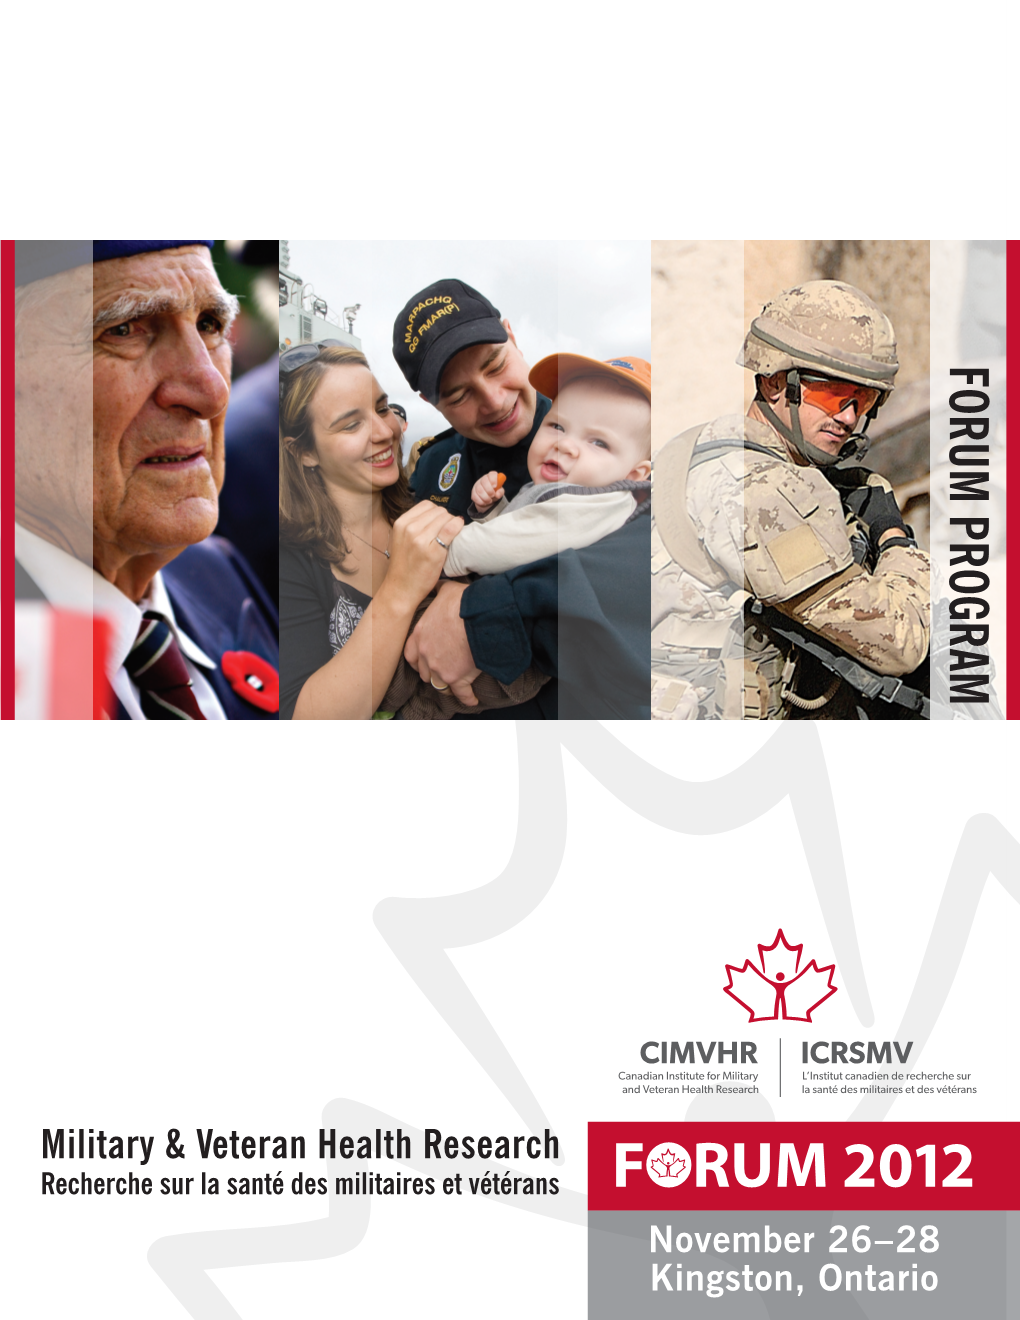 Forum 2012 Program